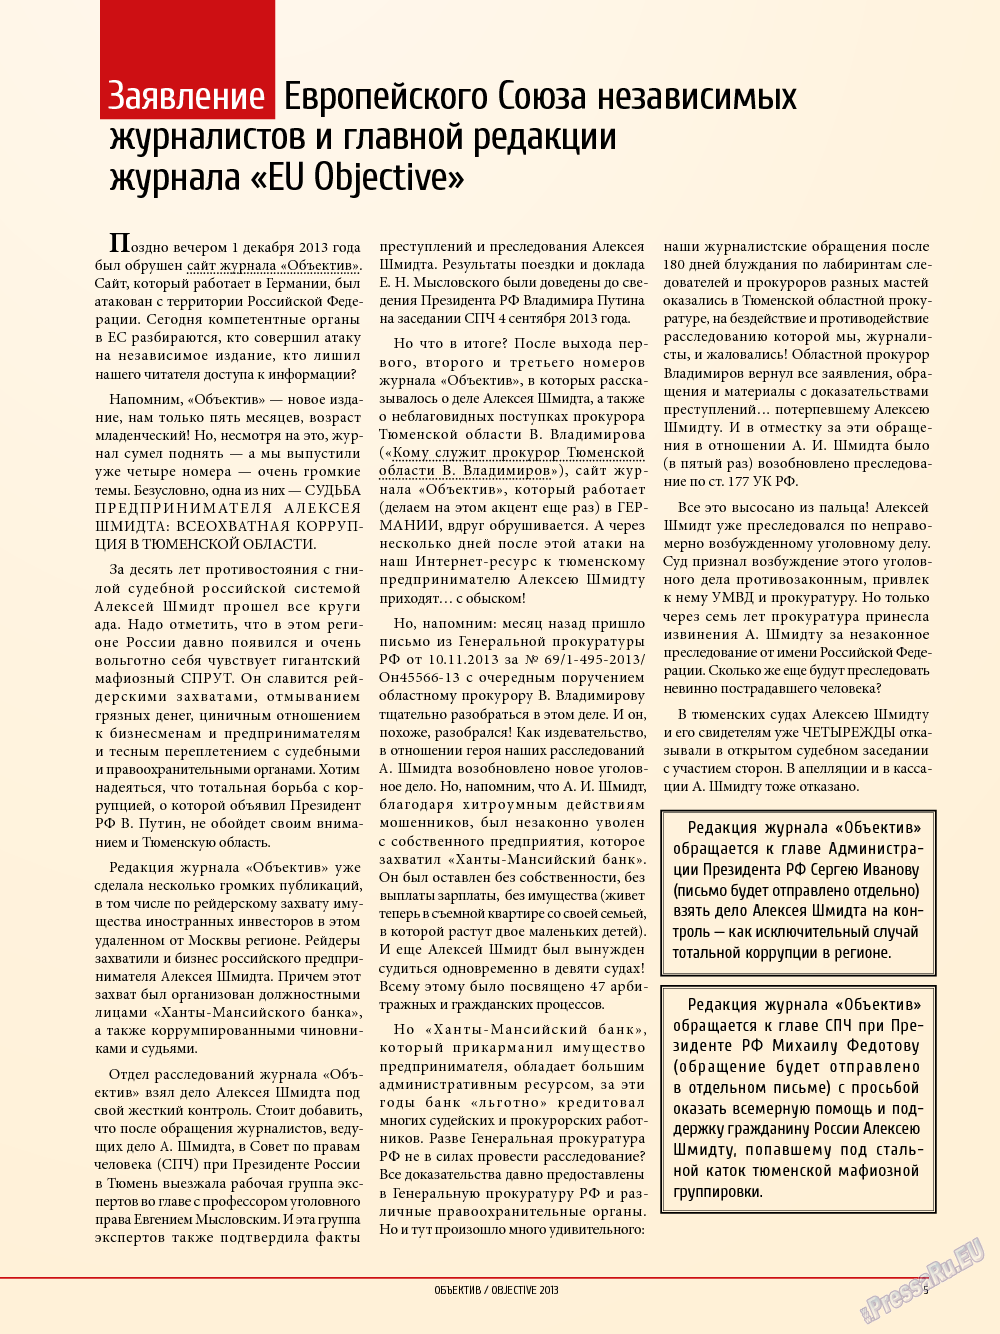 Объектив EU, журнал. 2013 №5 стр.5